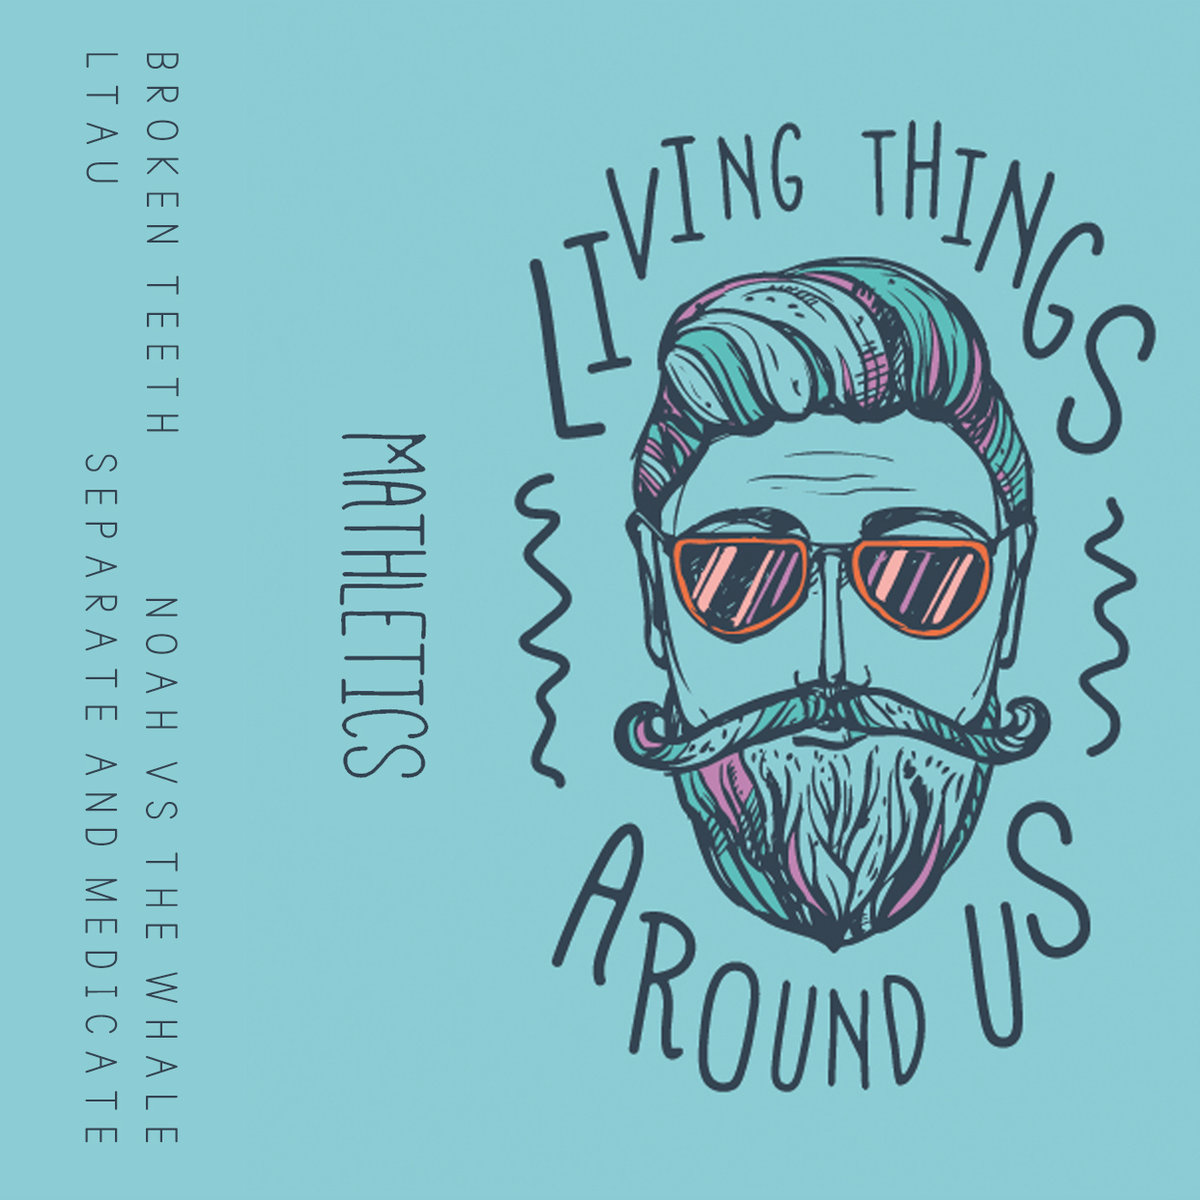 Mathletics - Living Things Around Us Cass.